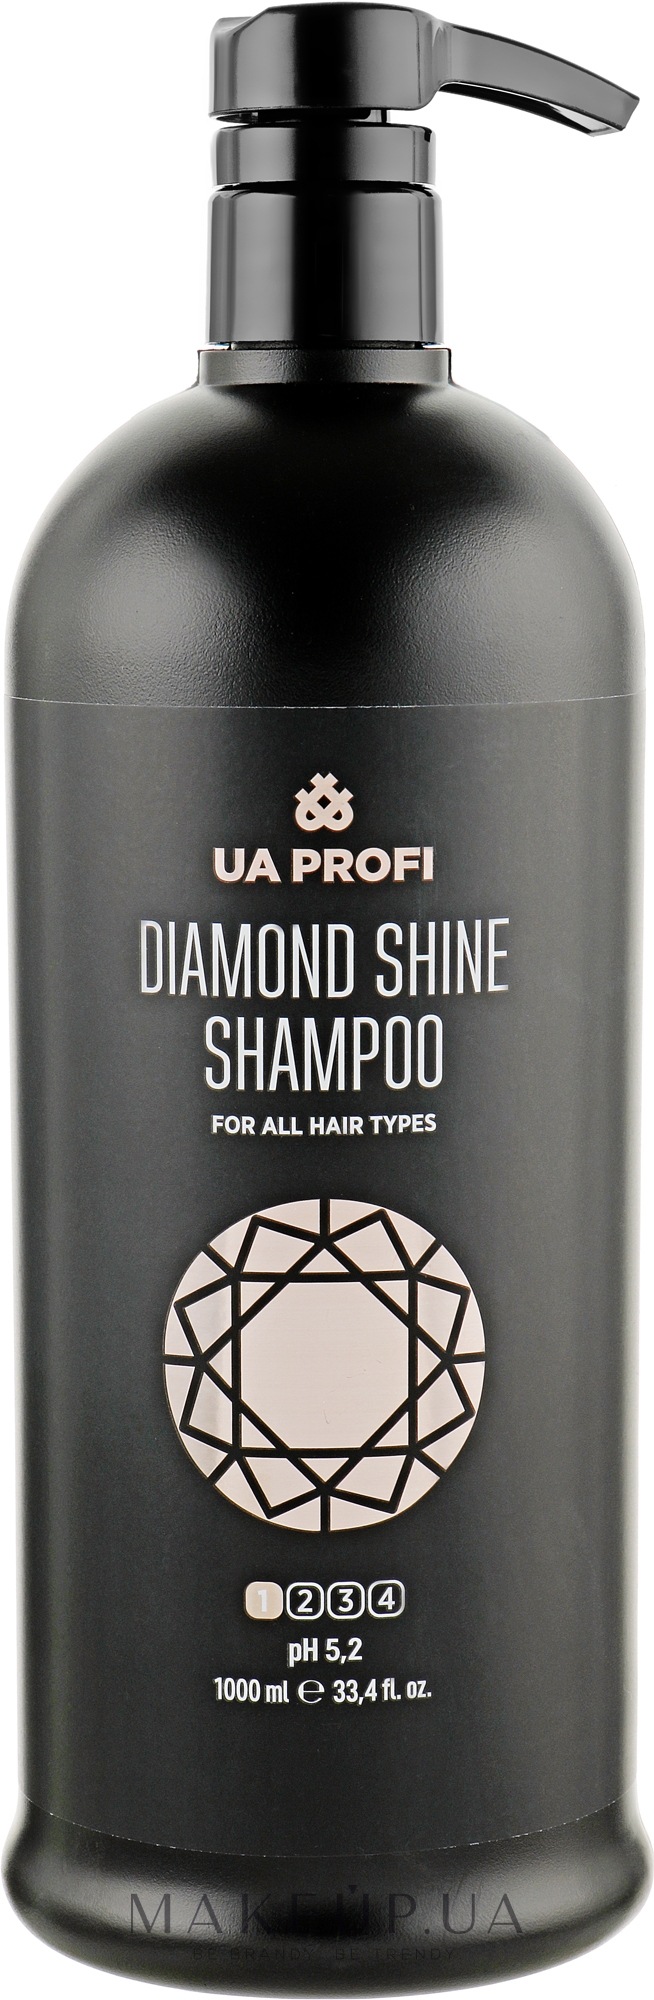 Шампунь "Бриллиантовый блеск" для всех типов волос - UA Profi Diamond Shine For All Hair Types Shampoo pH 5.2 — фото 1000ml